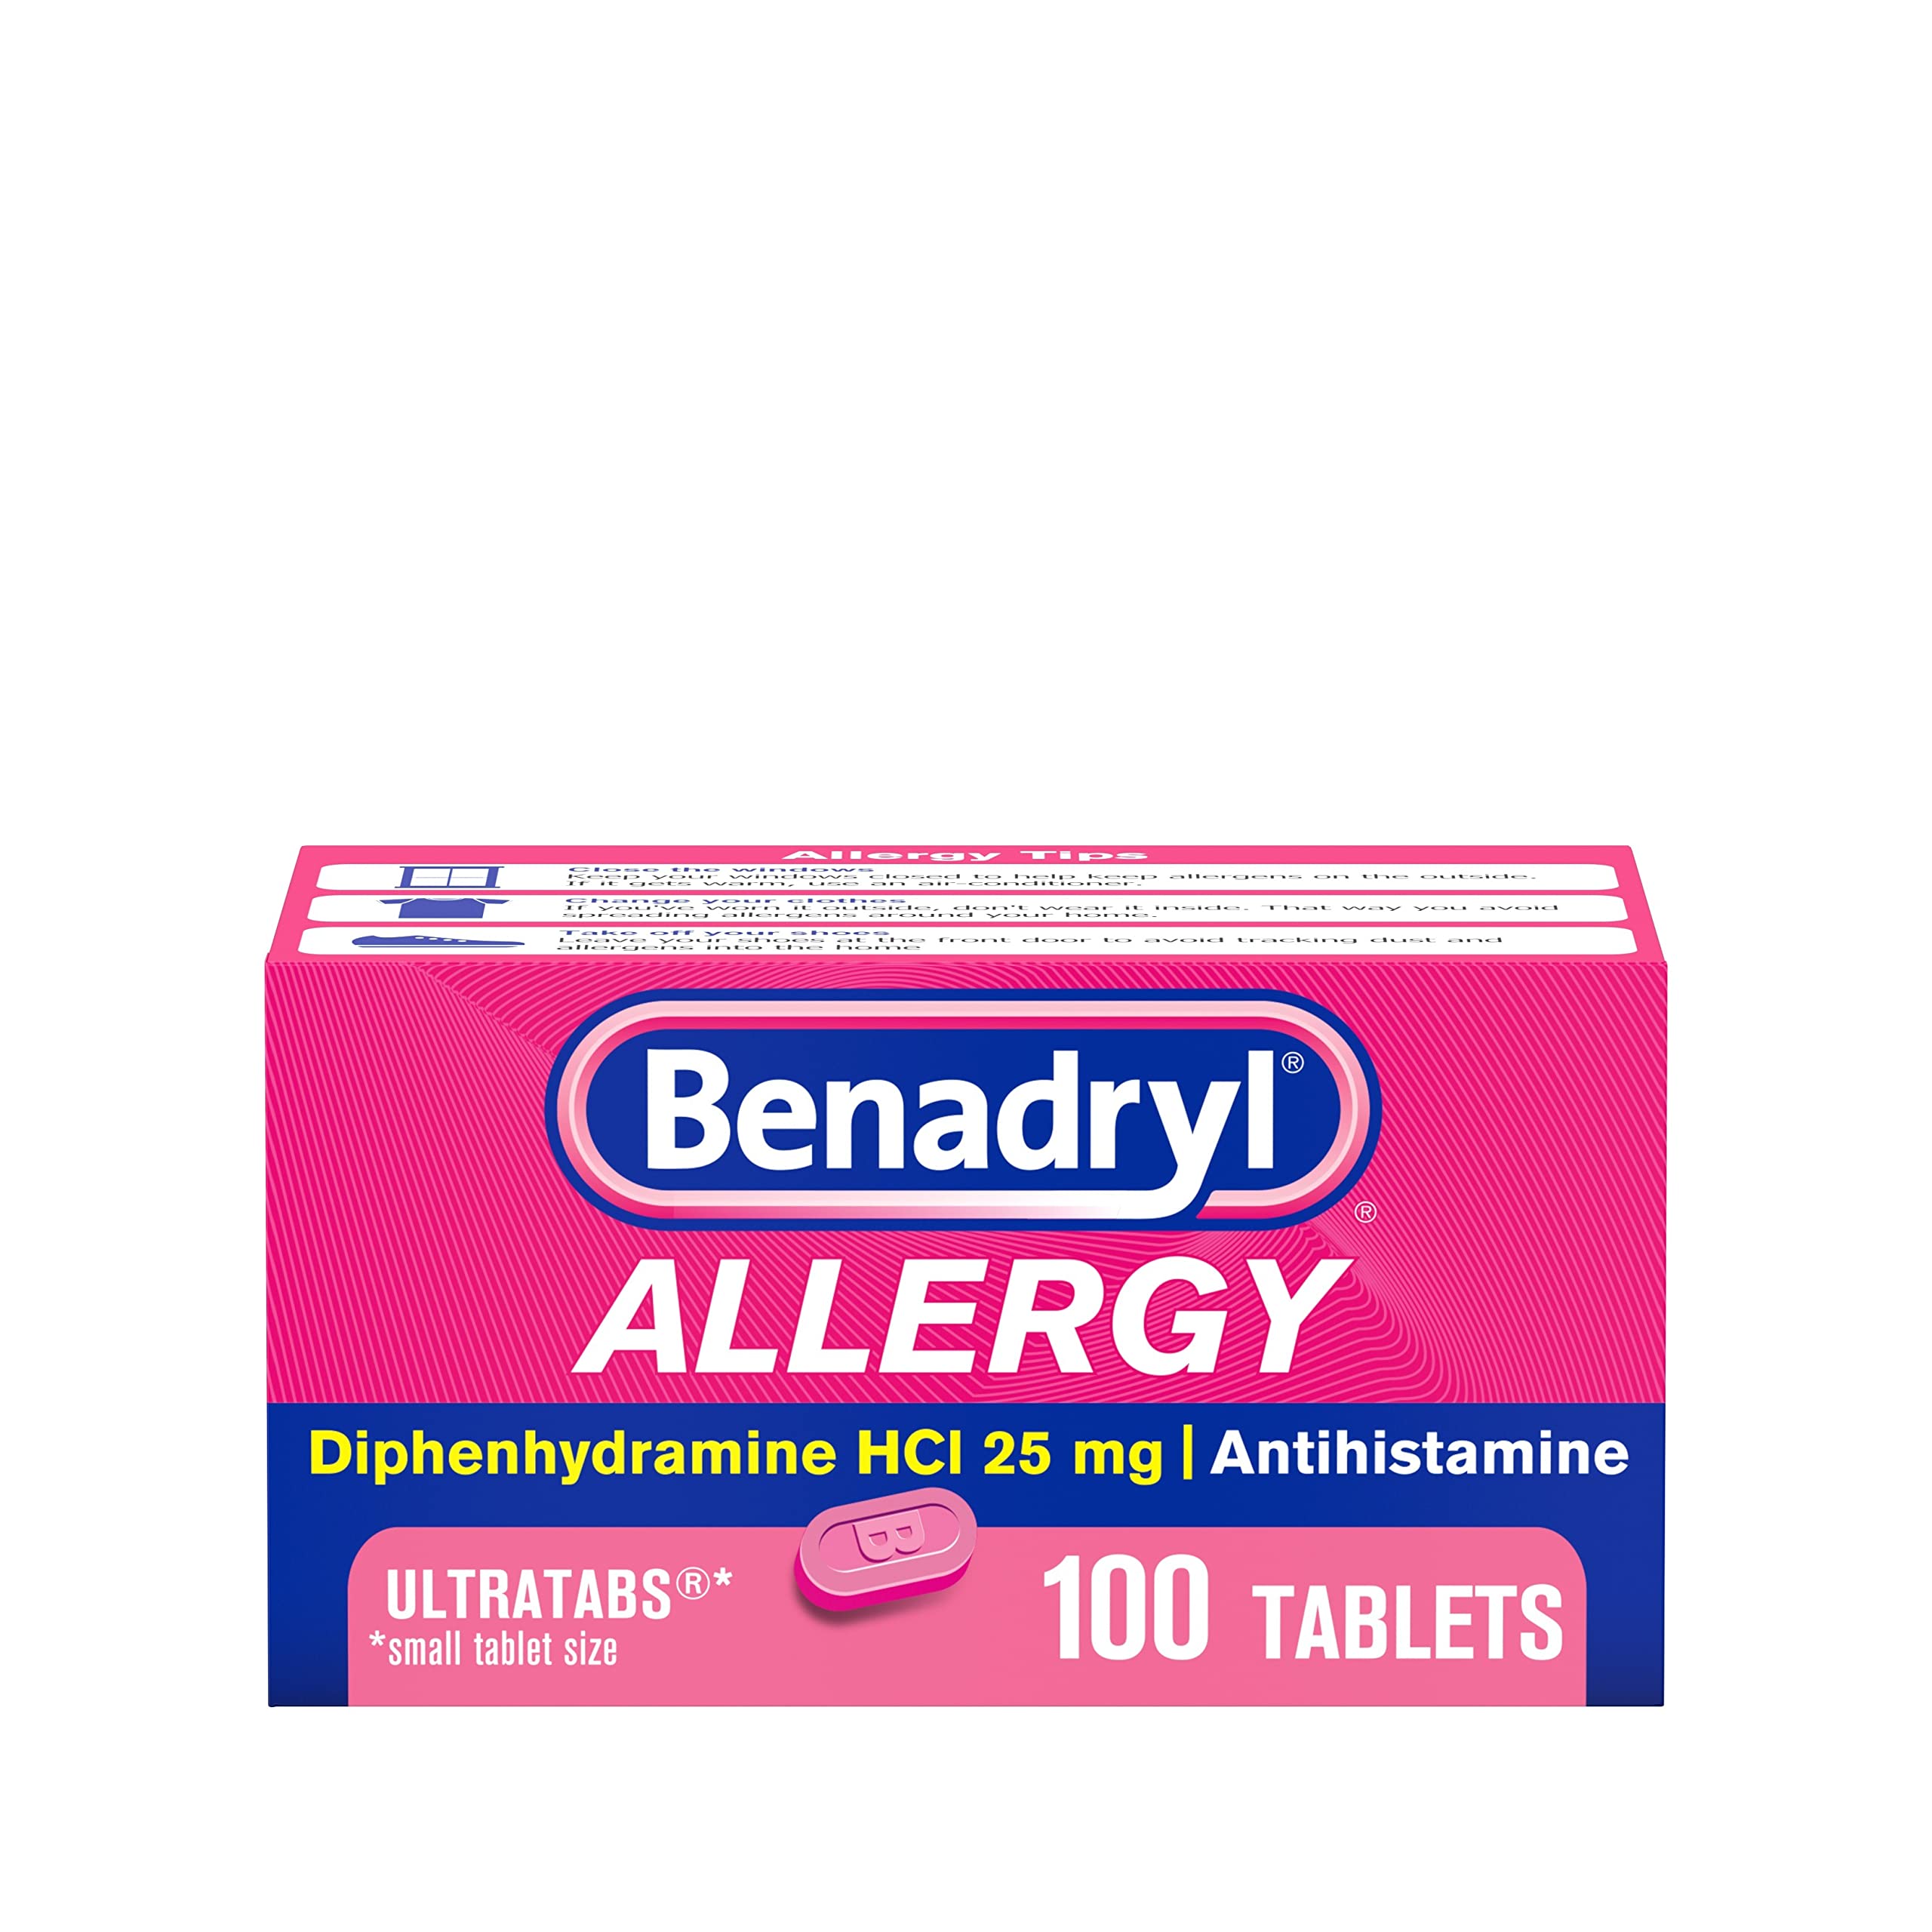 Benadryl Ultratabs Antihistamine Allergy Relief Tablets, Diphenhydramine HCl, 100 ct